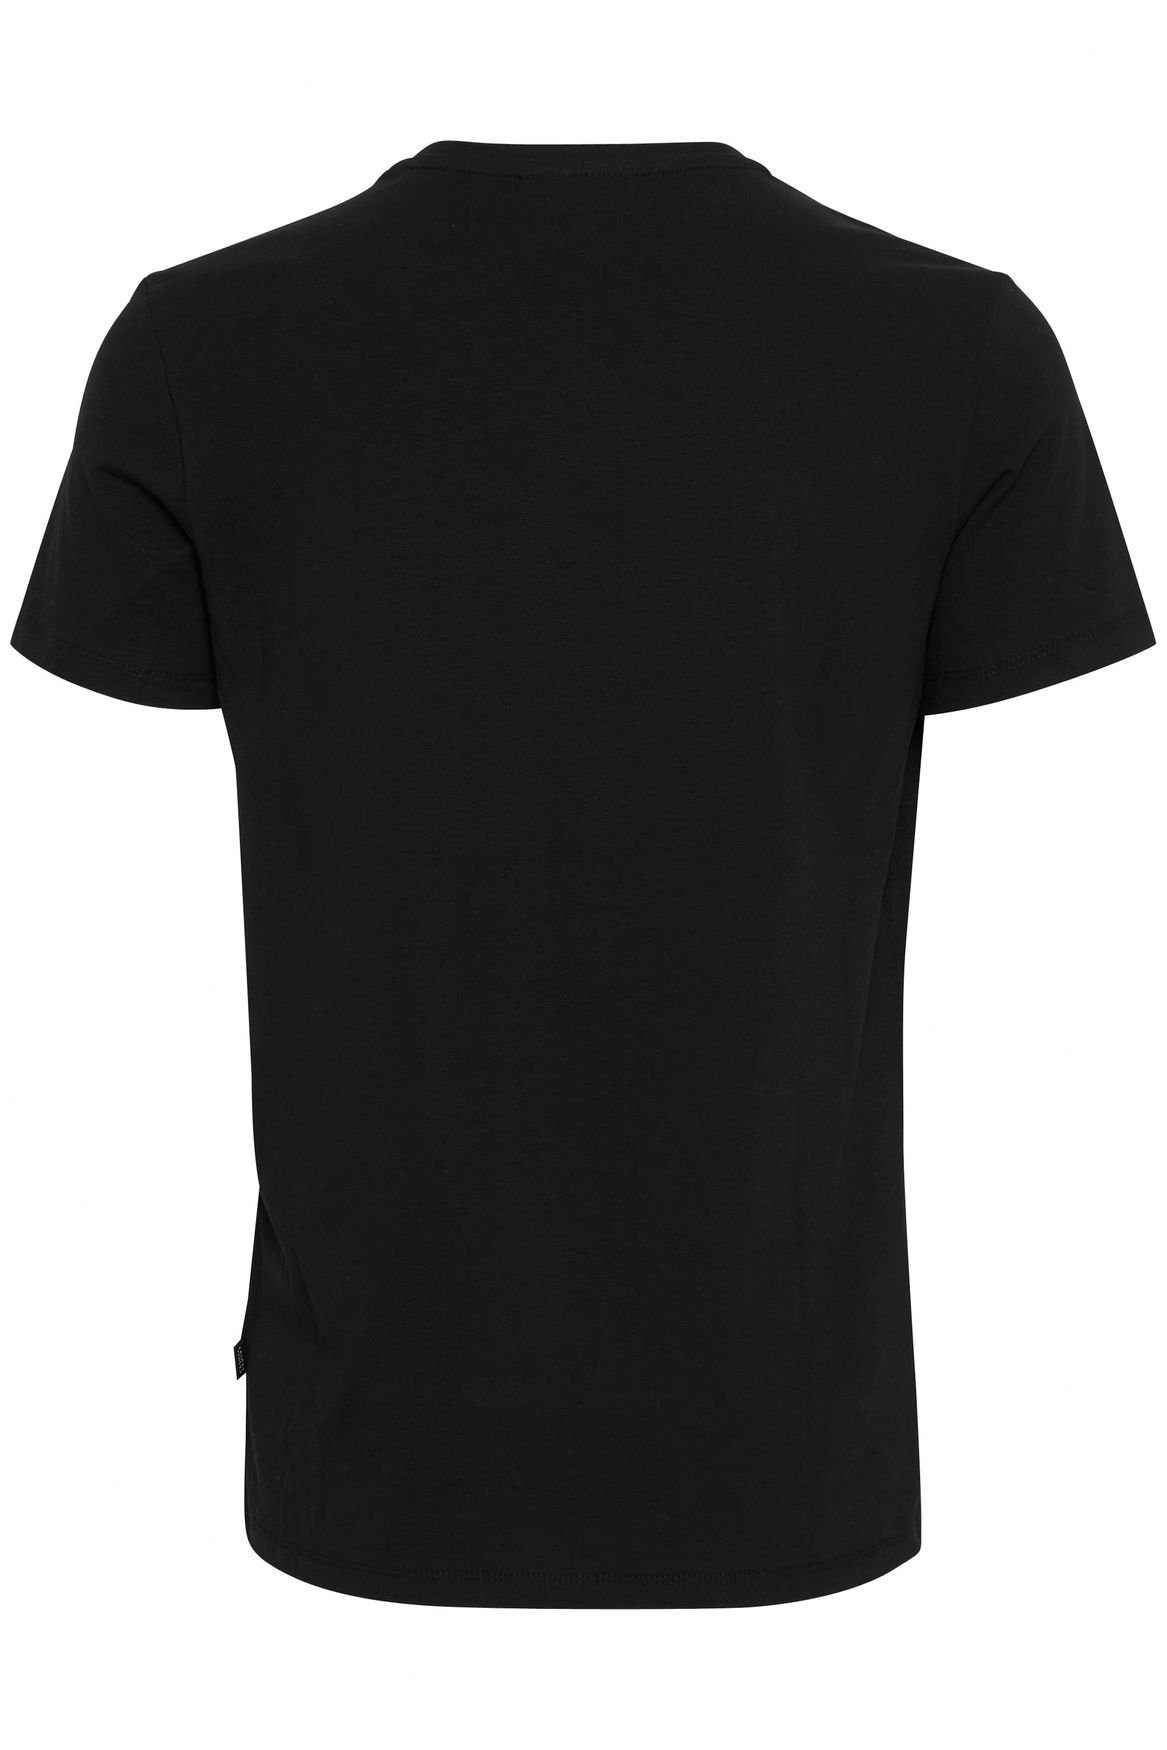 Casual Friday T-Shirt V-Ausschnitt Schwarz Kurzarm Basic 4458 in T-Shirt LINCOLN Einfarbiges